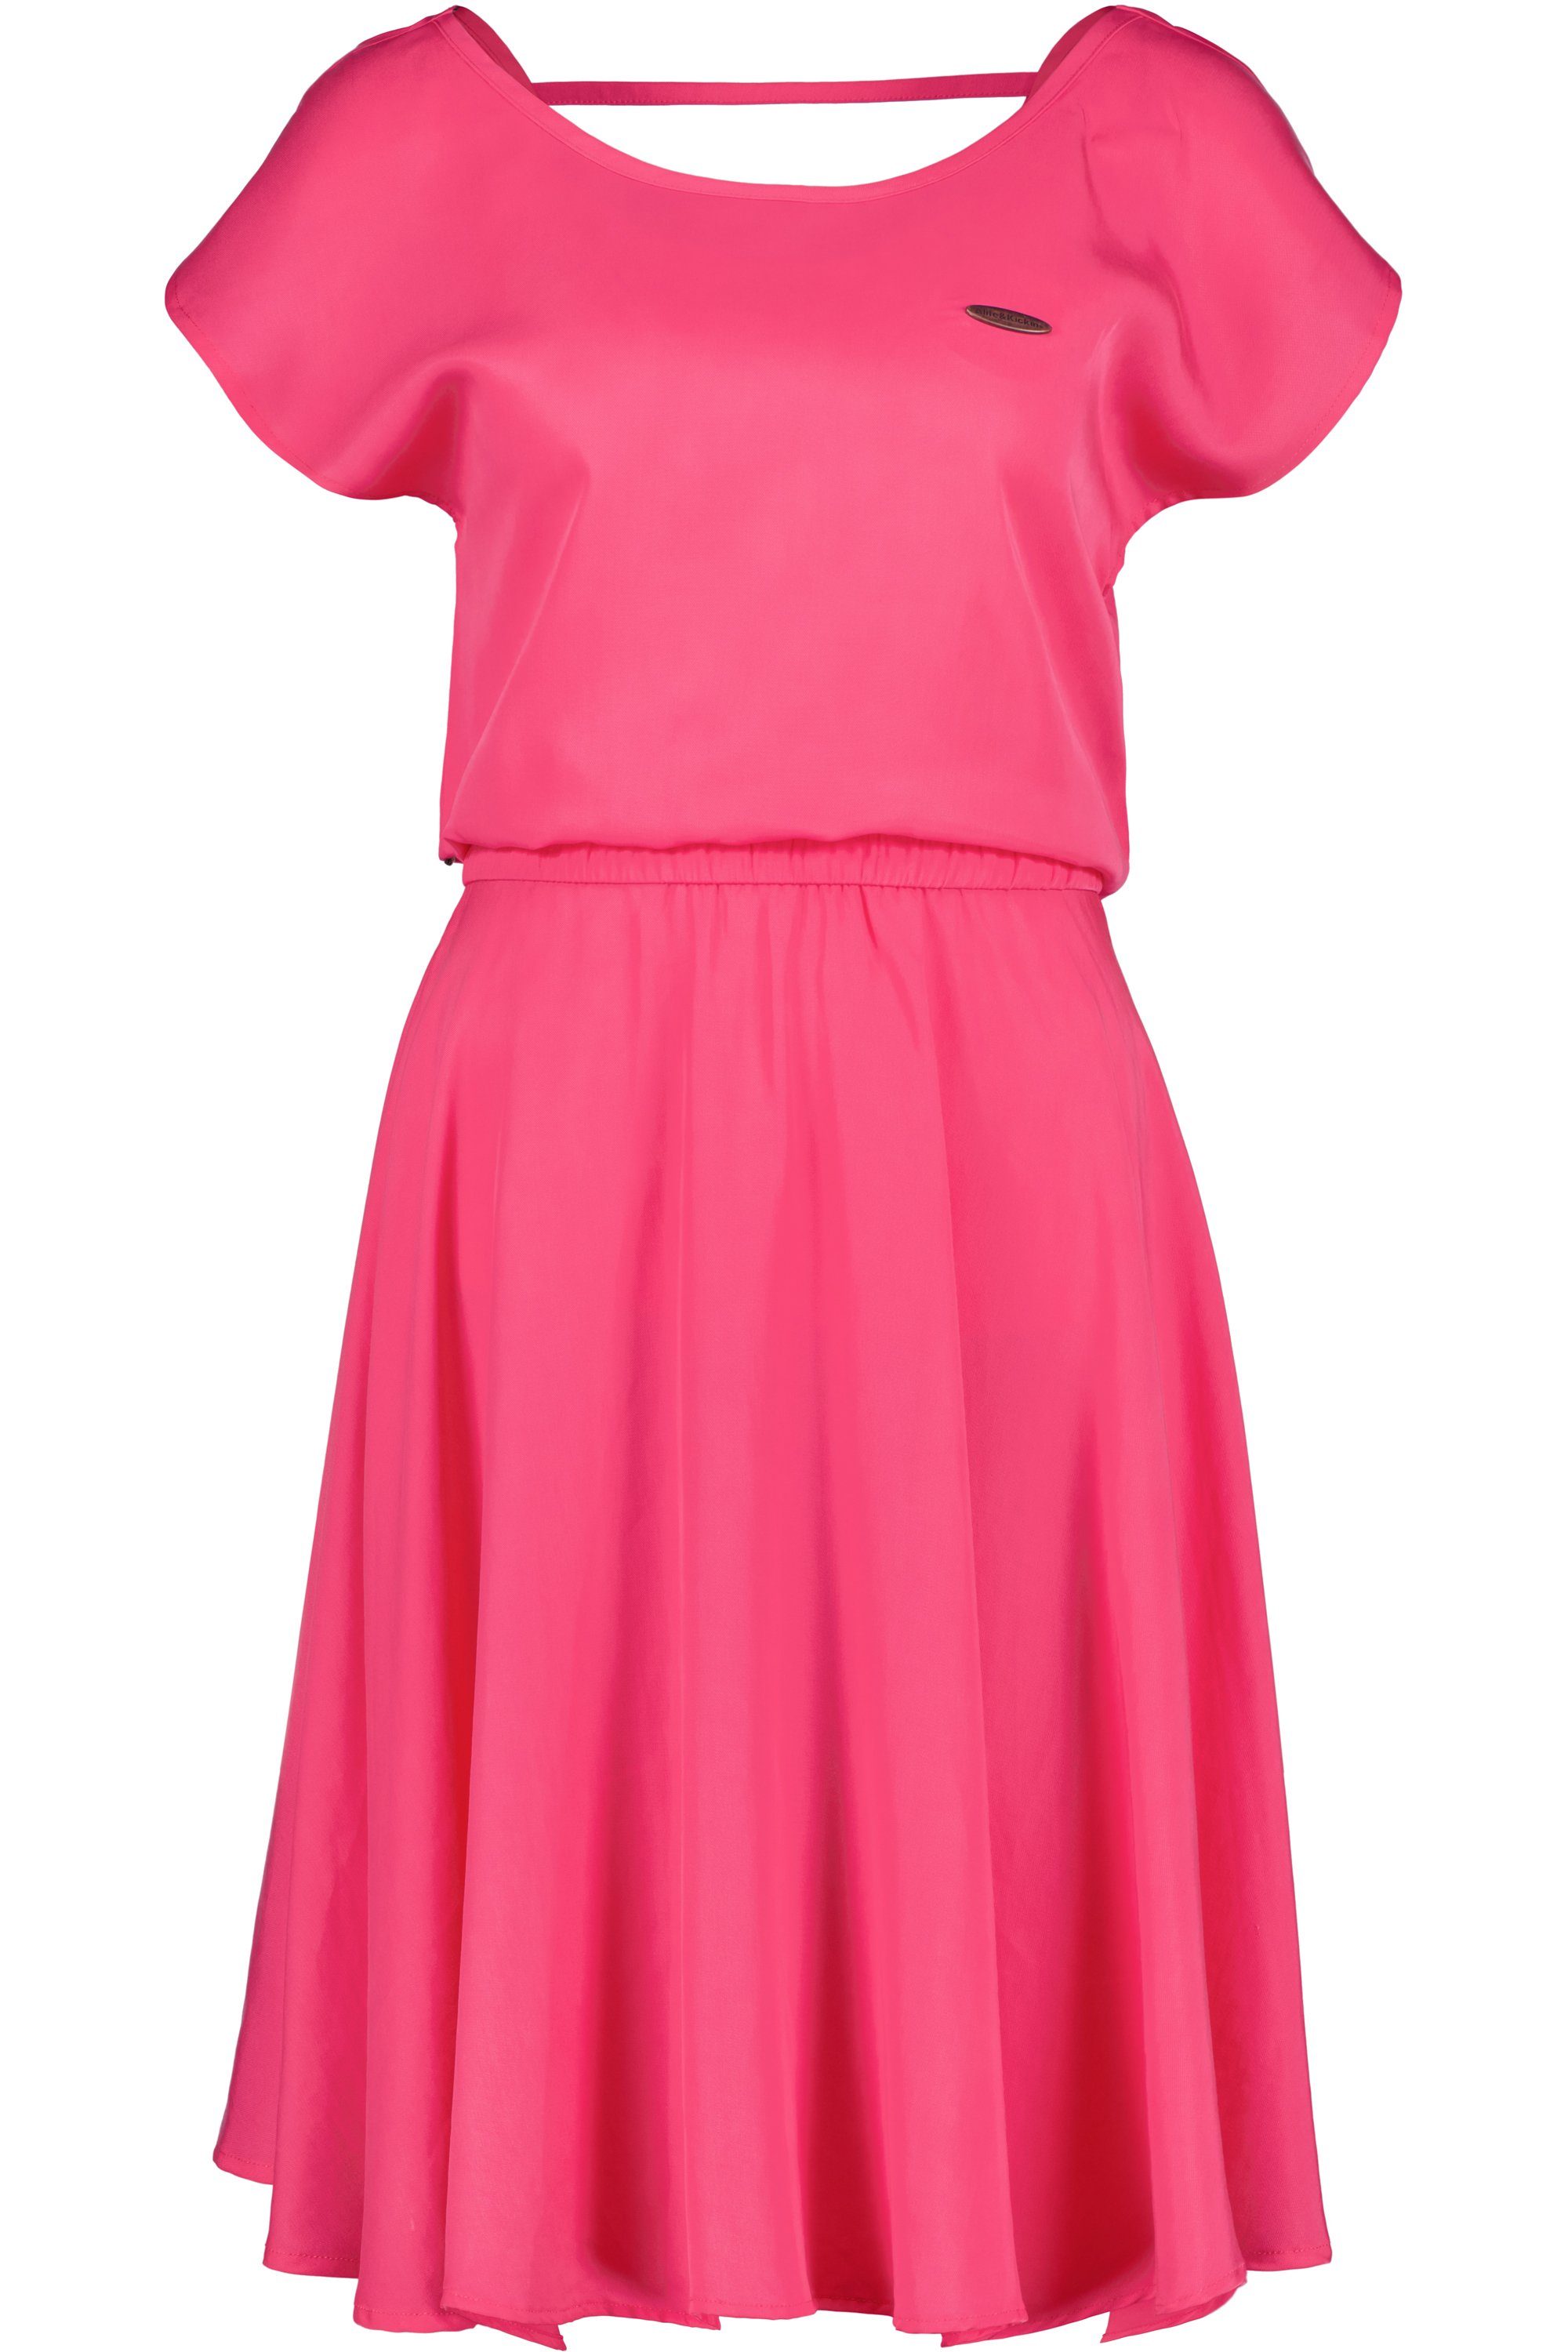 Alife & Dress Kleid Jerseykleid flamingo Damen Sommerkleid, Kickin IsabellaAK